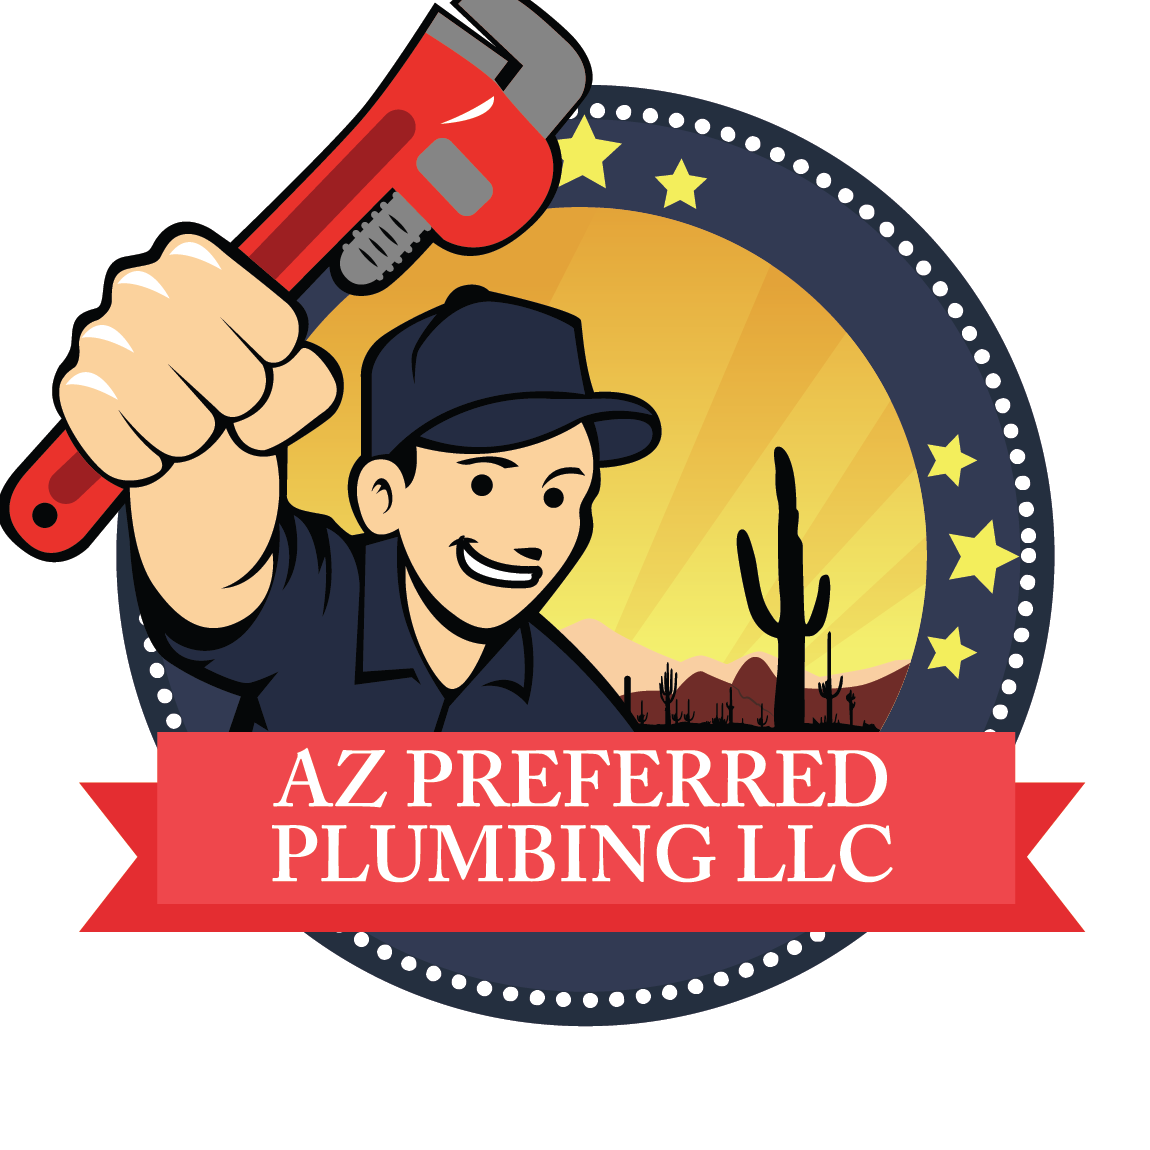 AZPrefferred Plumbing